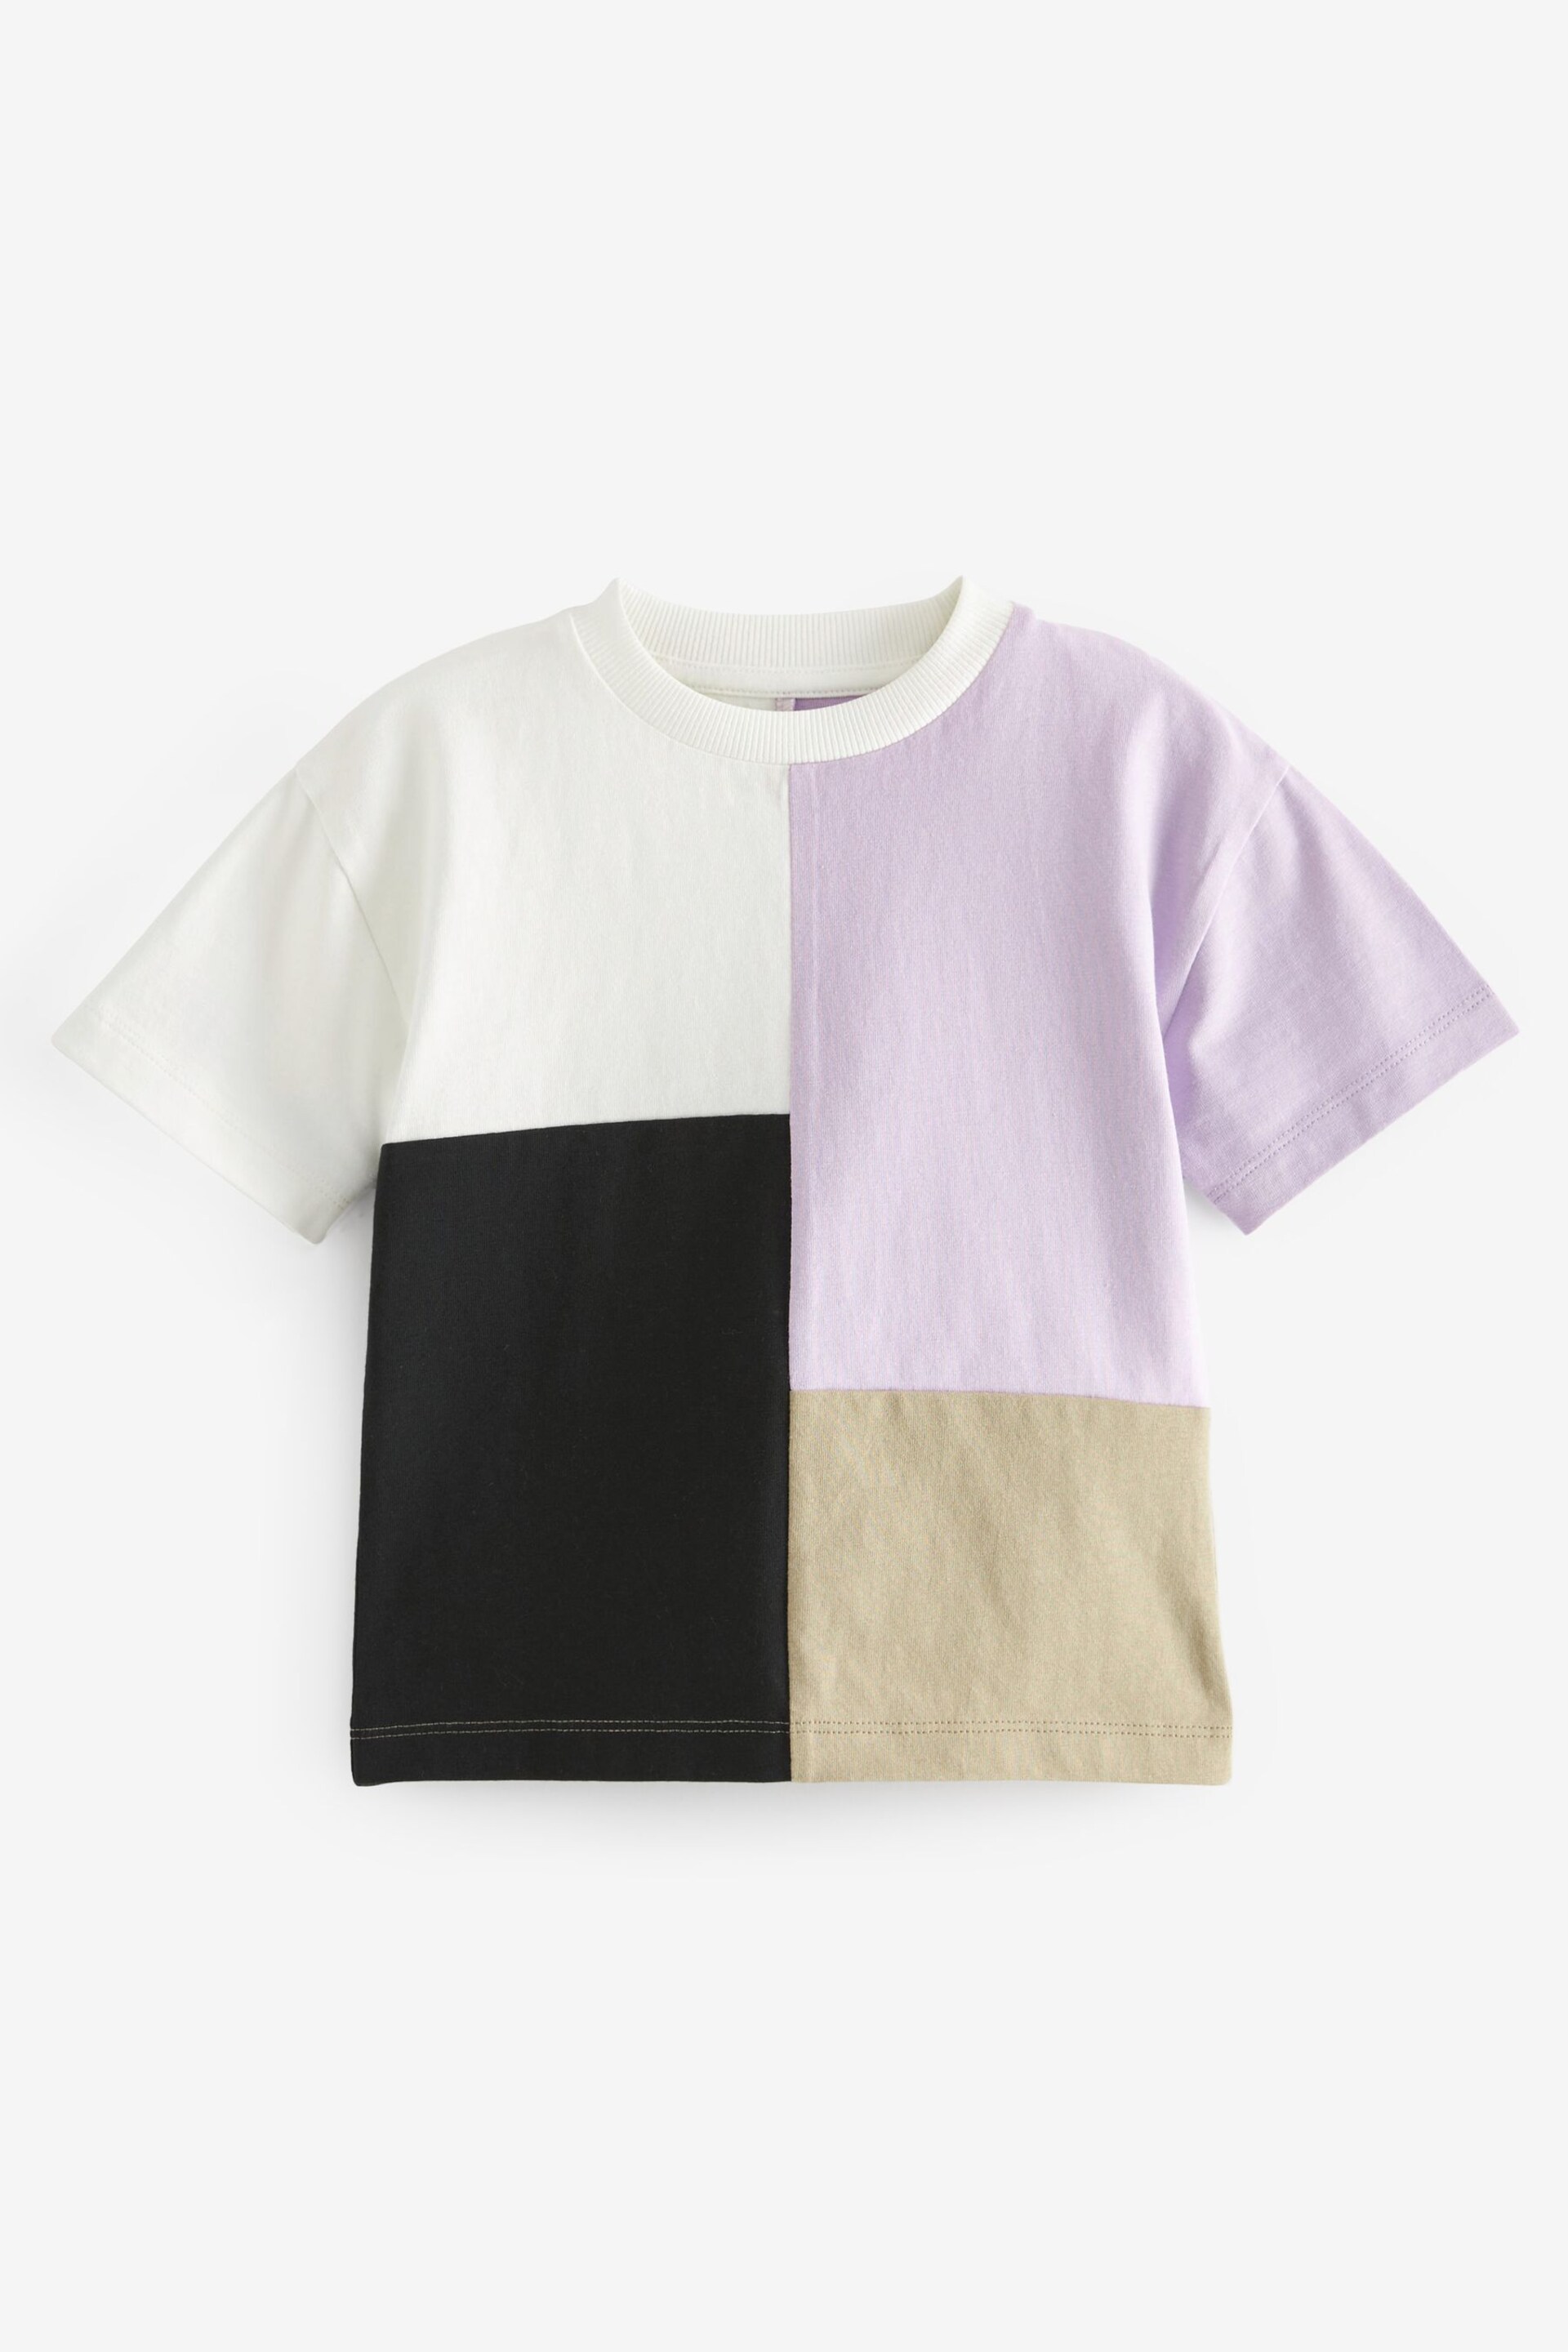 Black/Lilac Purple Short Sleeve Colourblock T-Shirt (3mths-7yrs) - Image 1 of 3